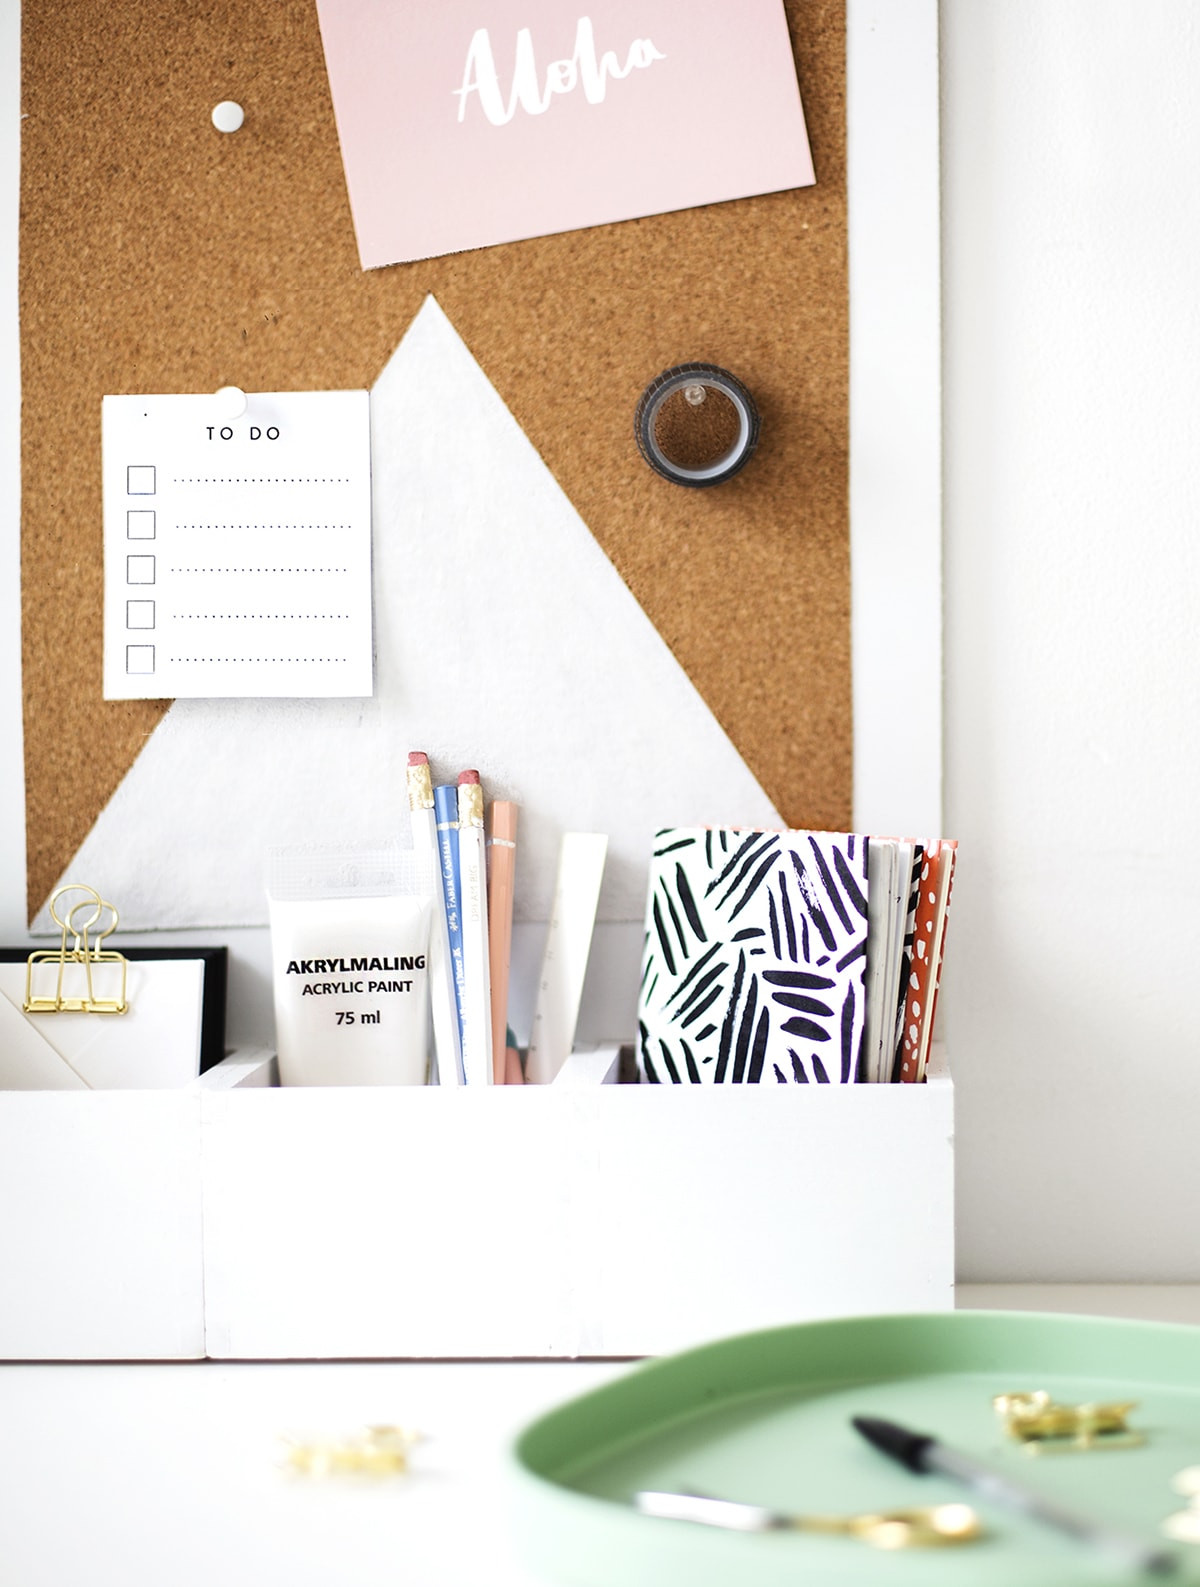 Best ideas about Desk Organizer DIY
. Save or Pin DIY Desk Organizer Now.